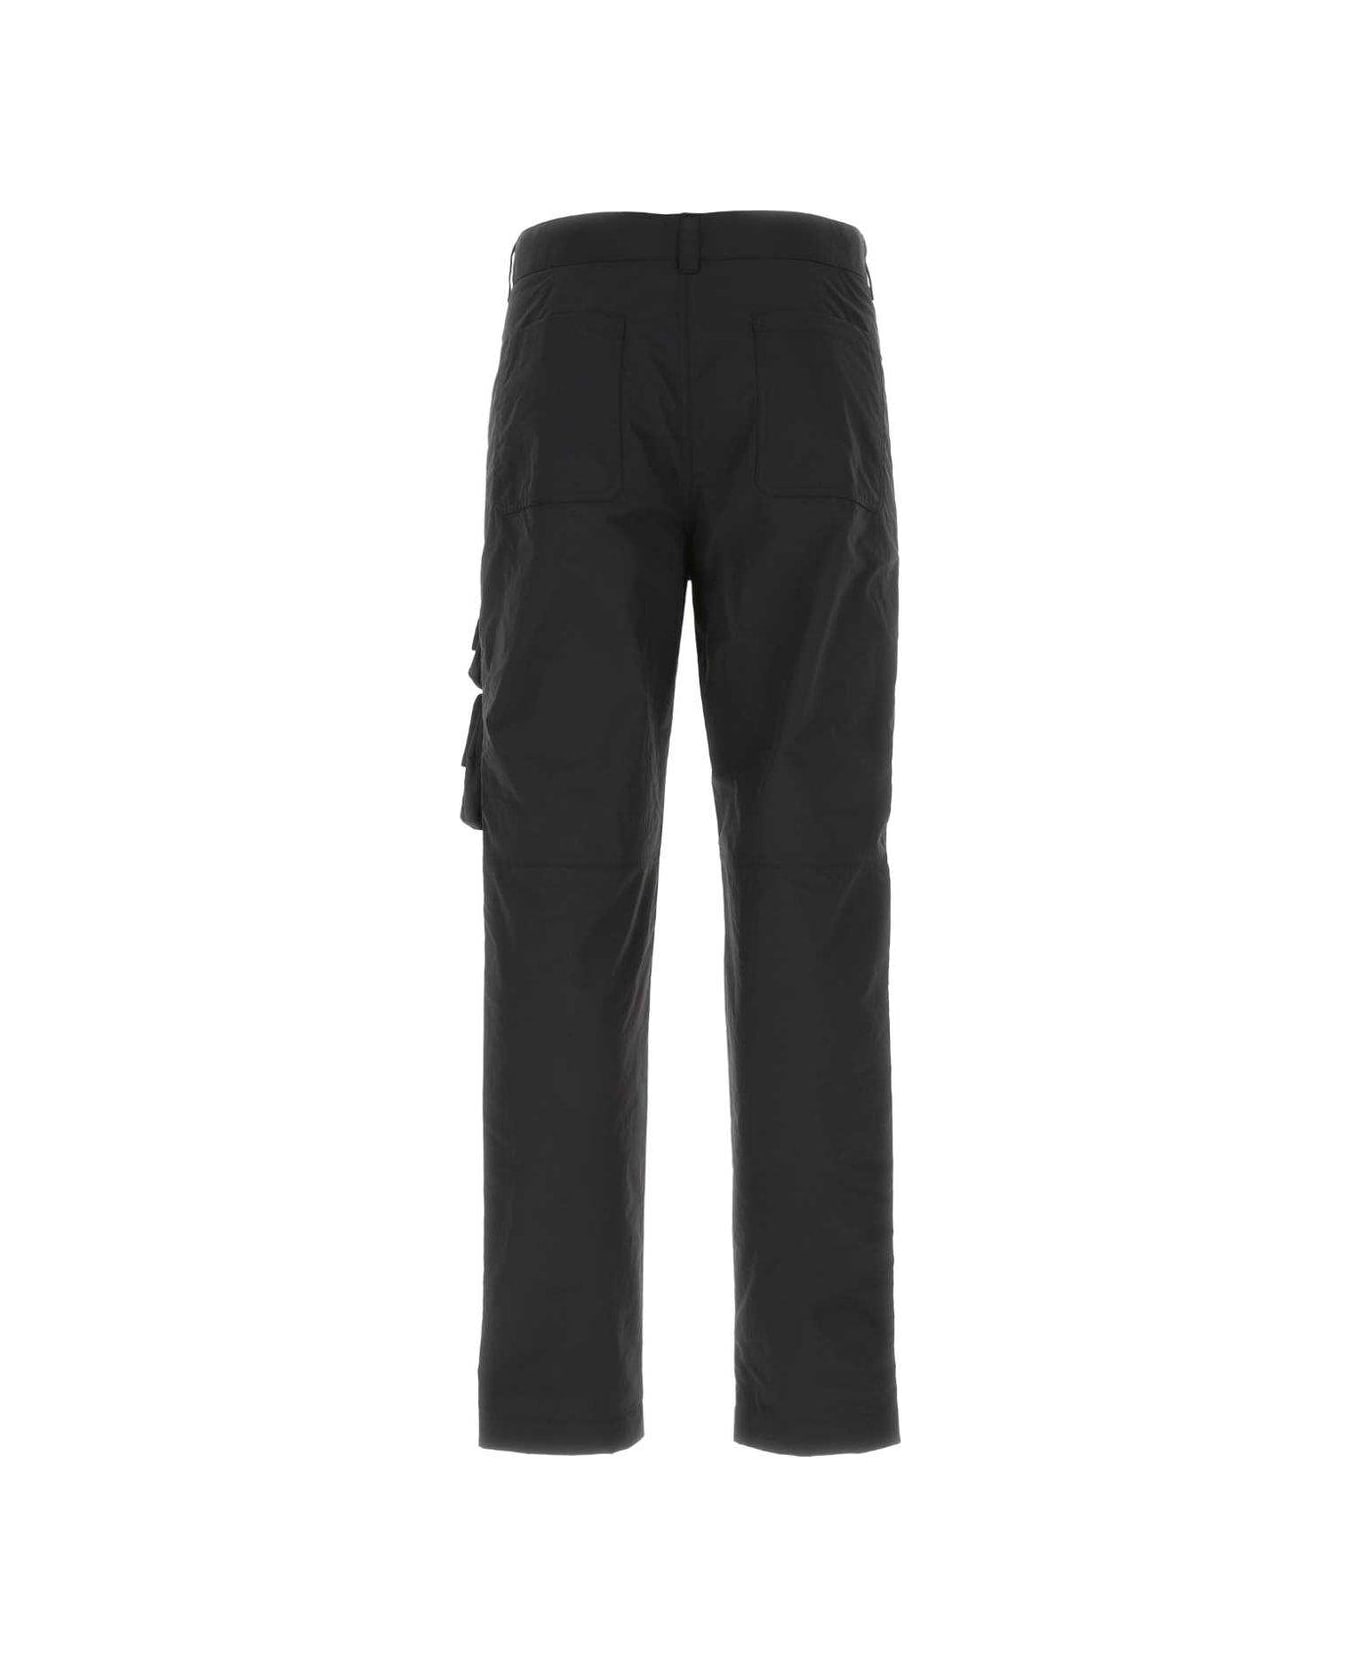 Fendi Zipped Pocket Pants - BLACK